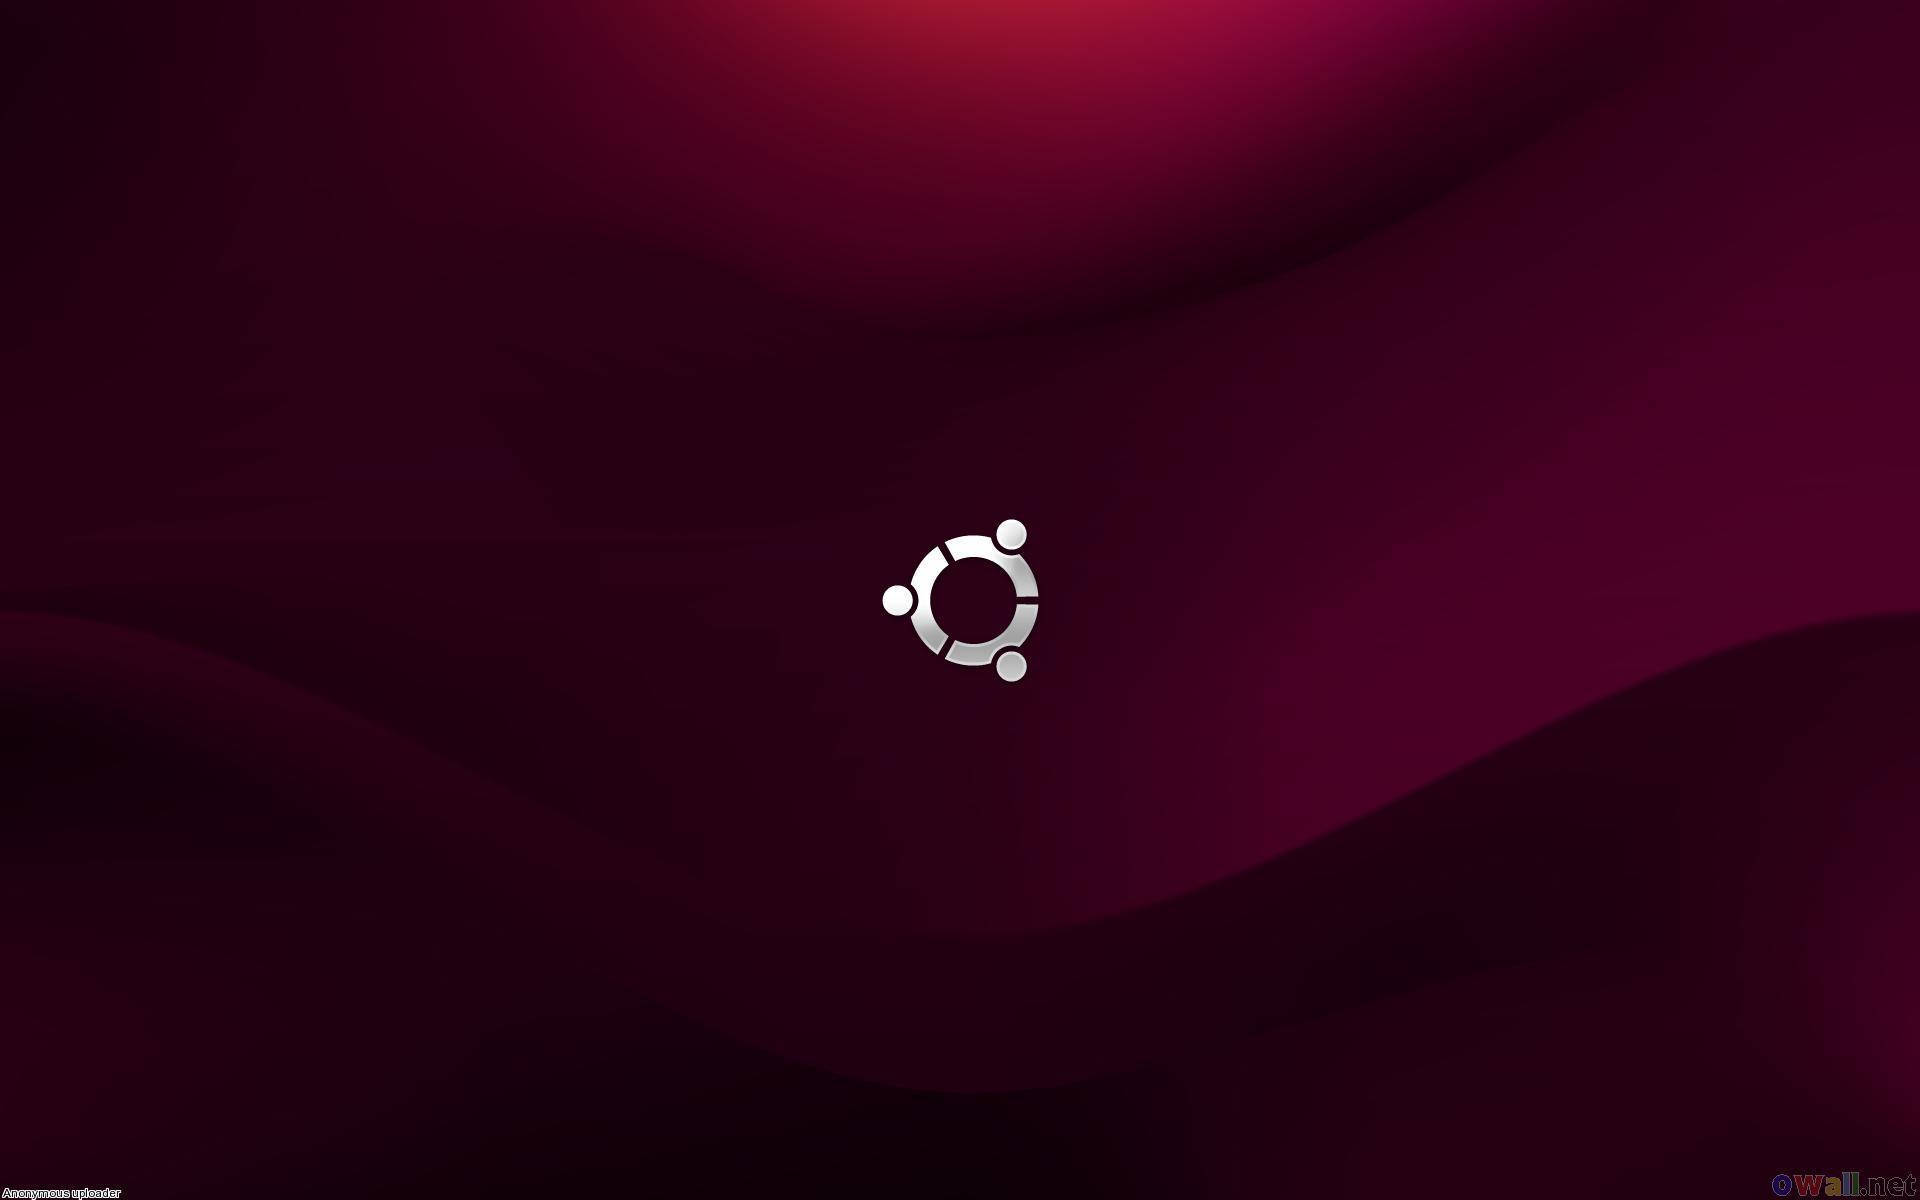 Ubuntu 1920X1200 Wallpaper and Background Image